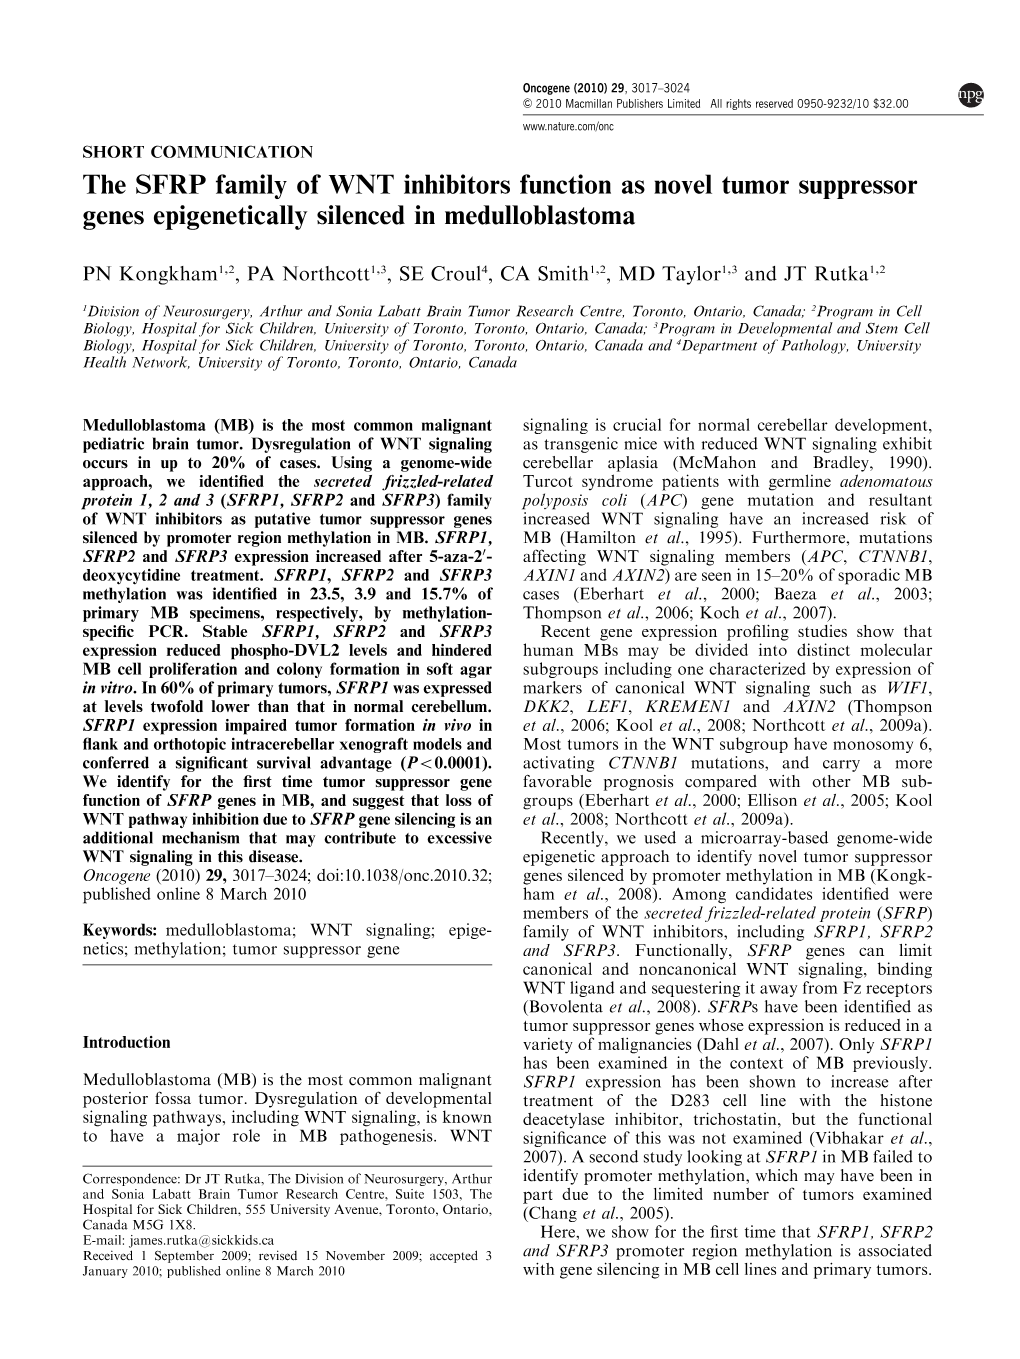 The SFRP Family of WNT Inhibitors Function As Novel Tumor Suppressor Genes Epigenetically Silenced in Medulloblastoma